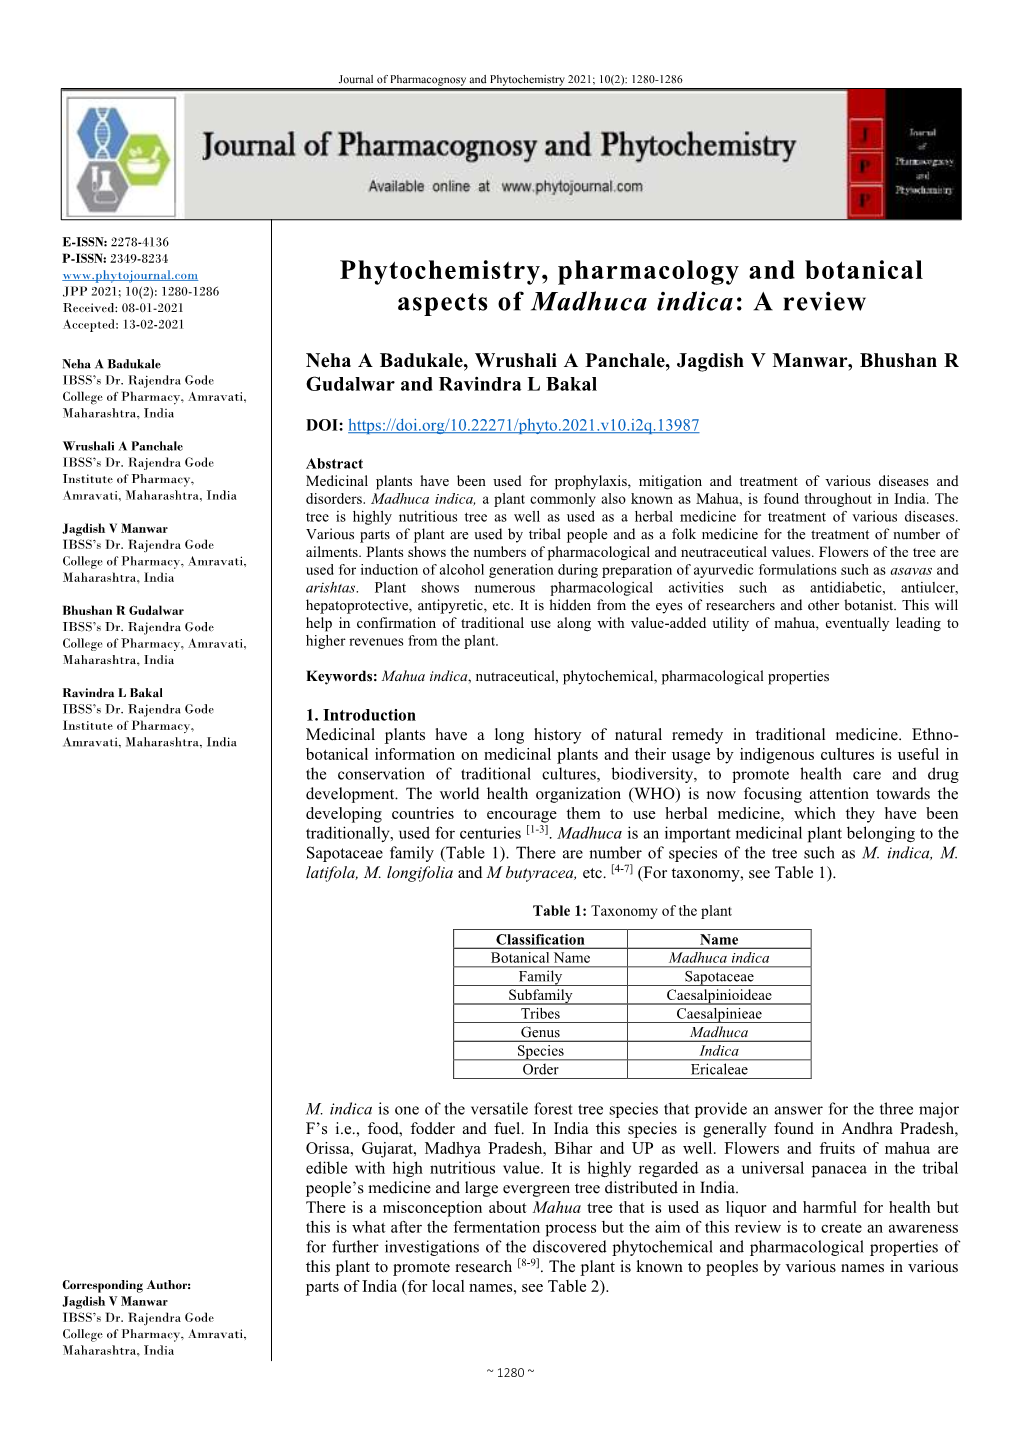 Phytochemistry, Pharmacology and Botanical Aspects of Madhuca Indica